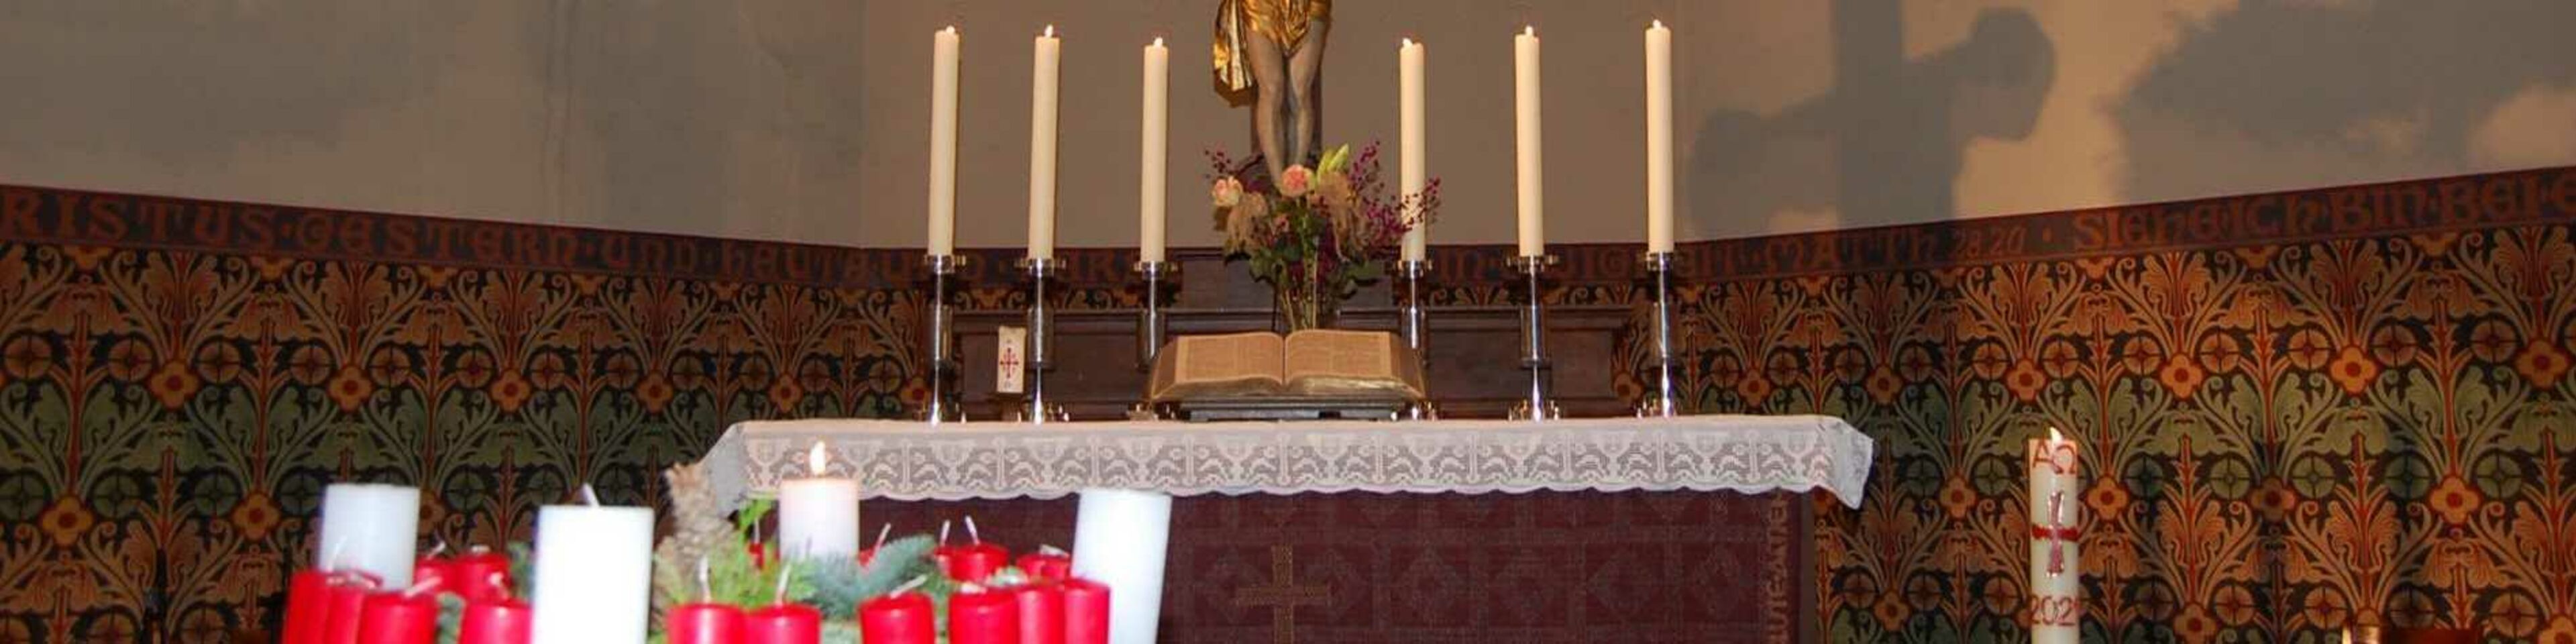 Altar im Advent